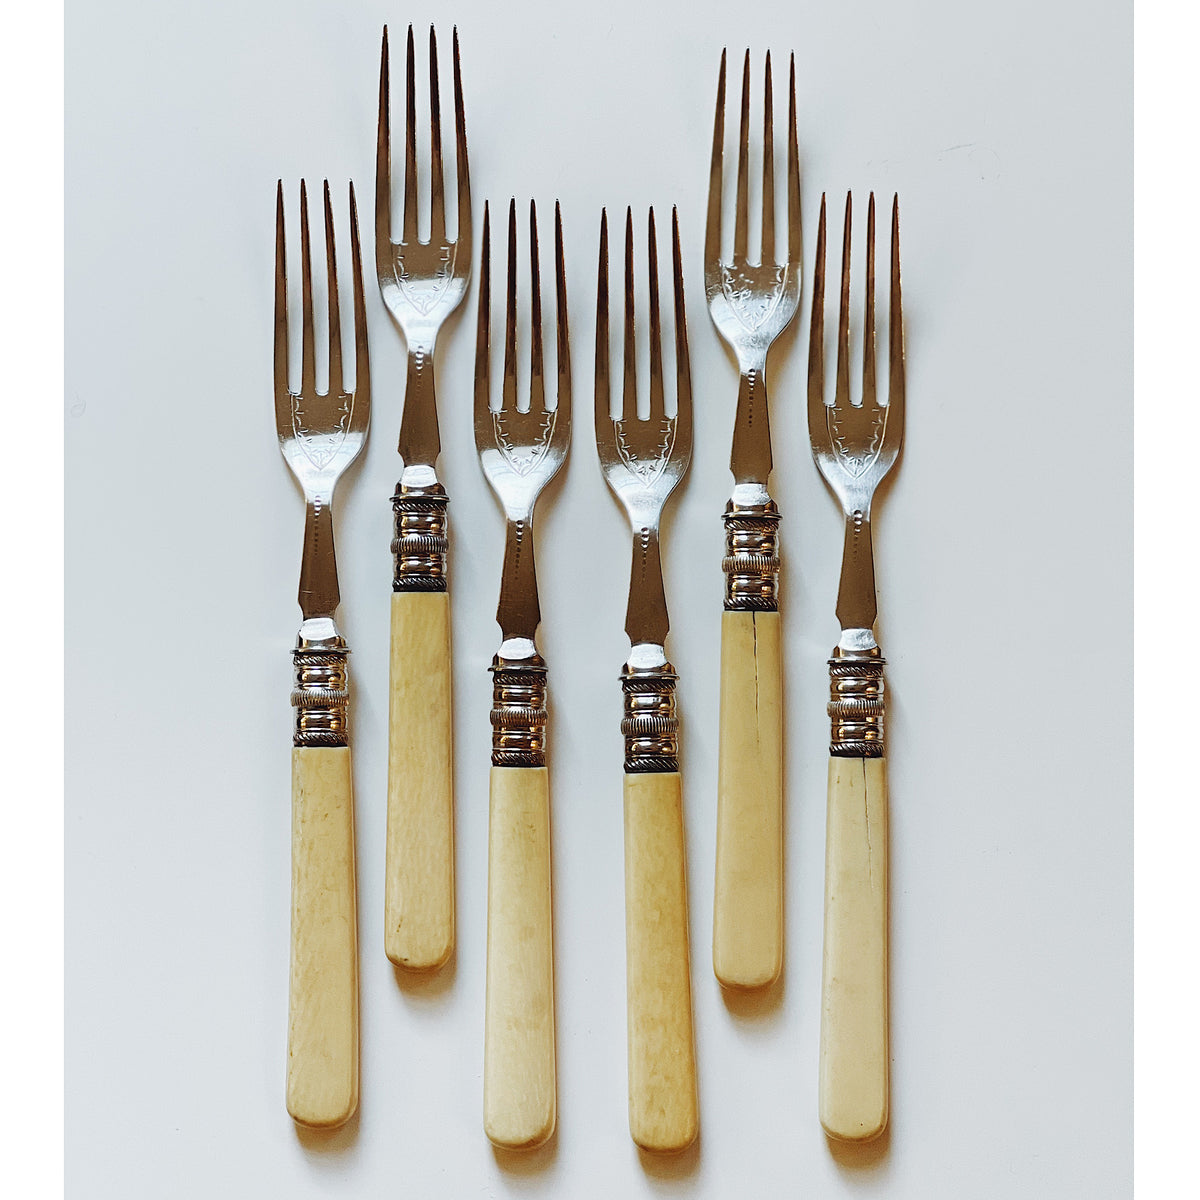 Antique Forks with Horn Handles, Set of 6